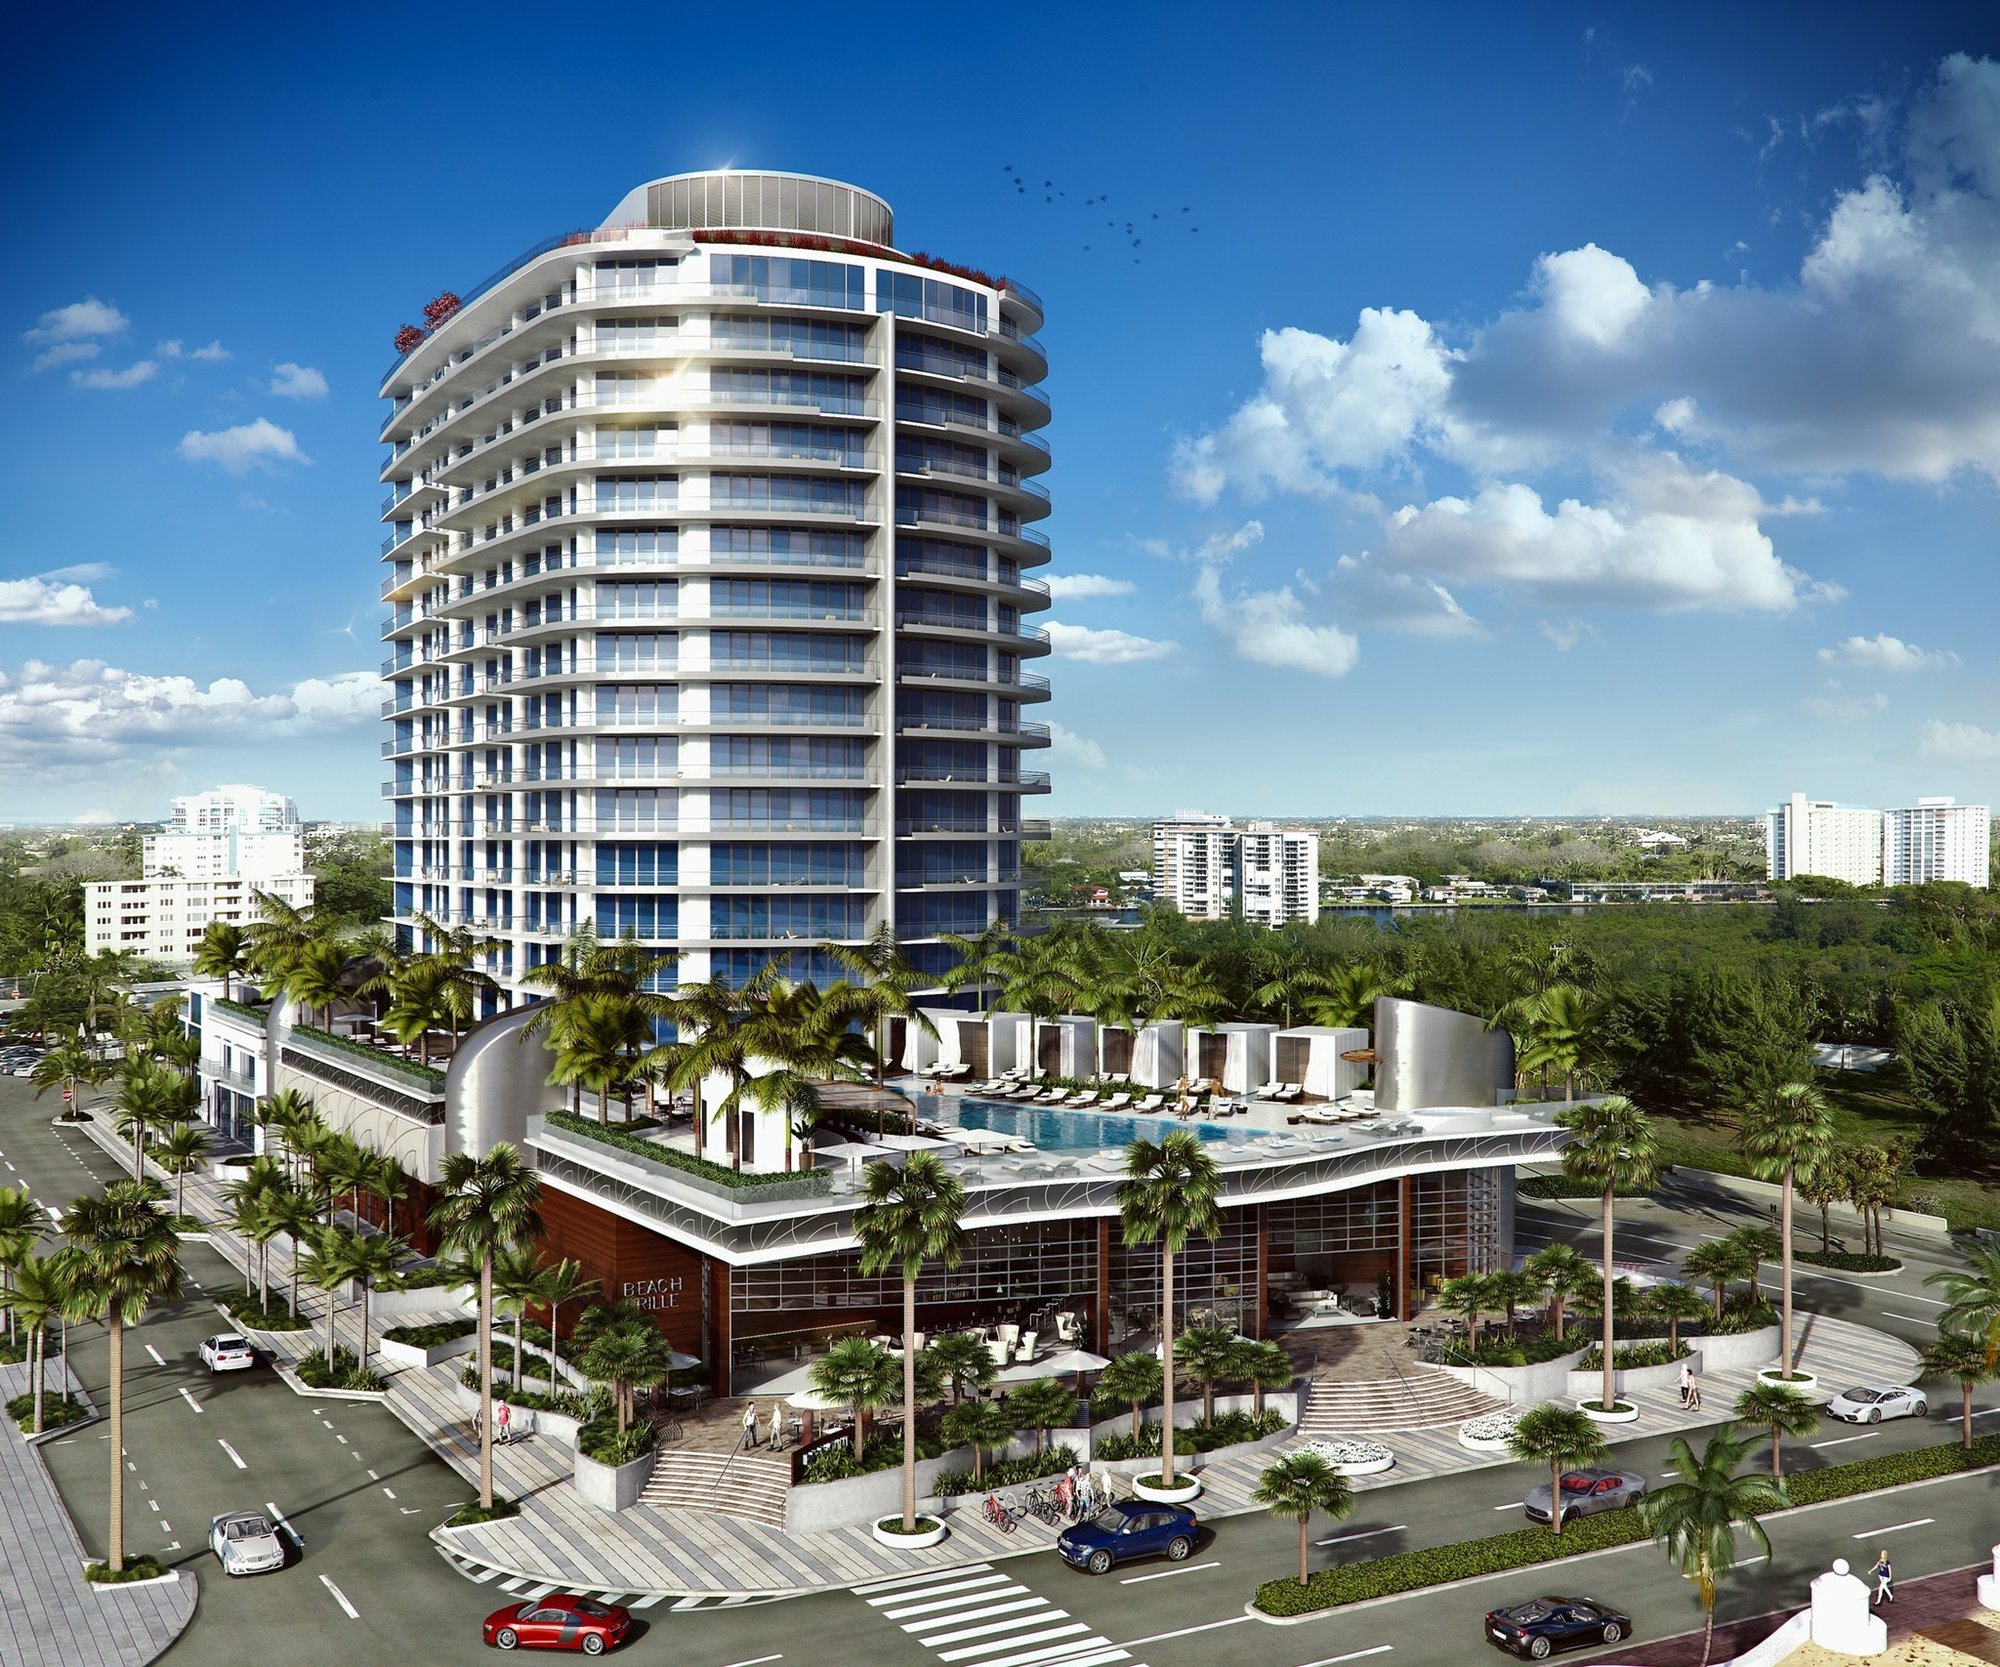 Exterior picture of Paramount condo building in Fort Lauderdale, Florida